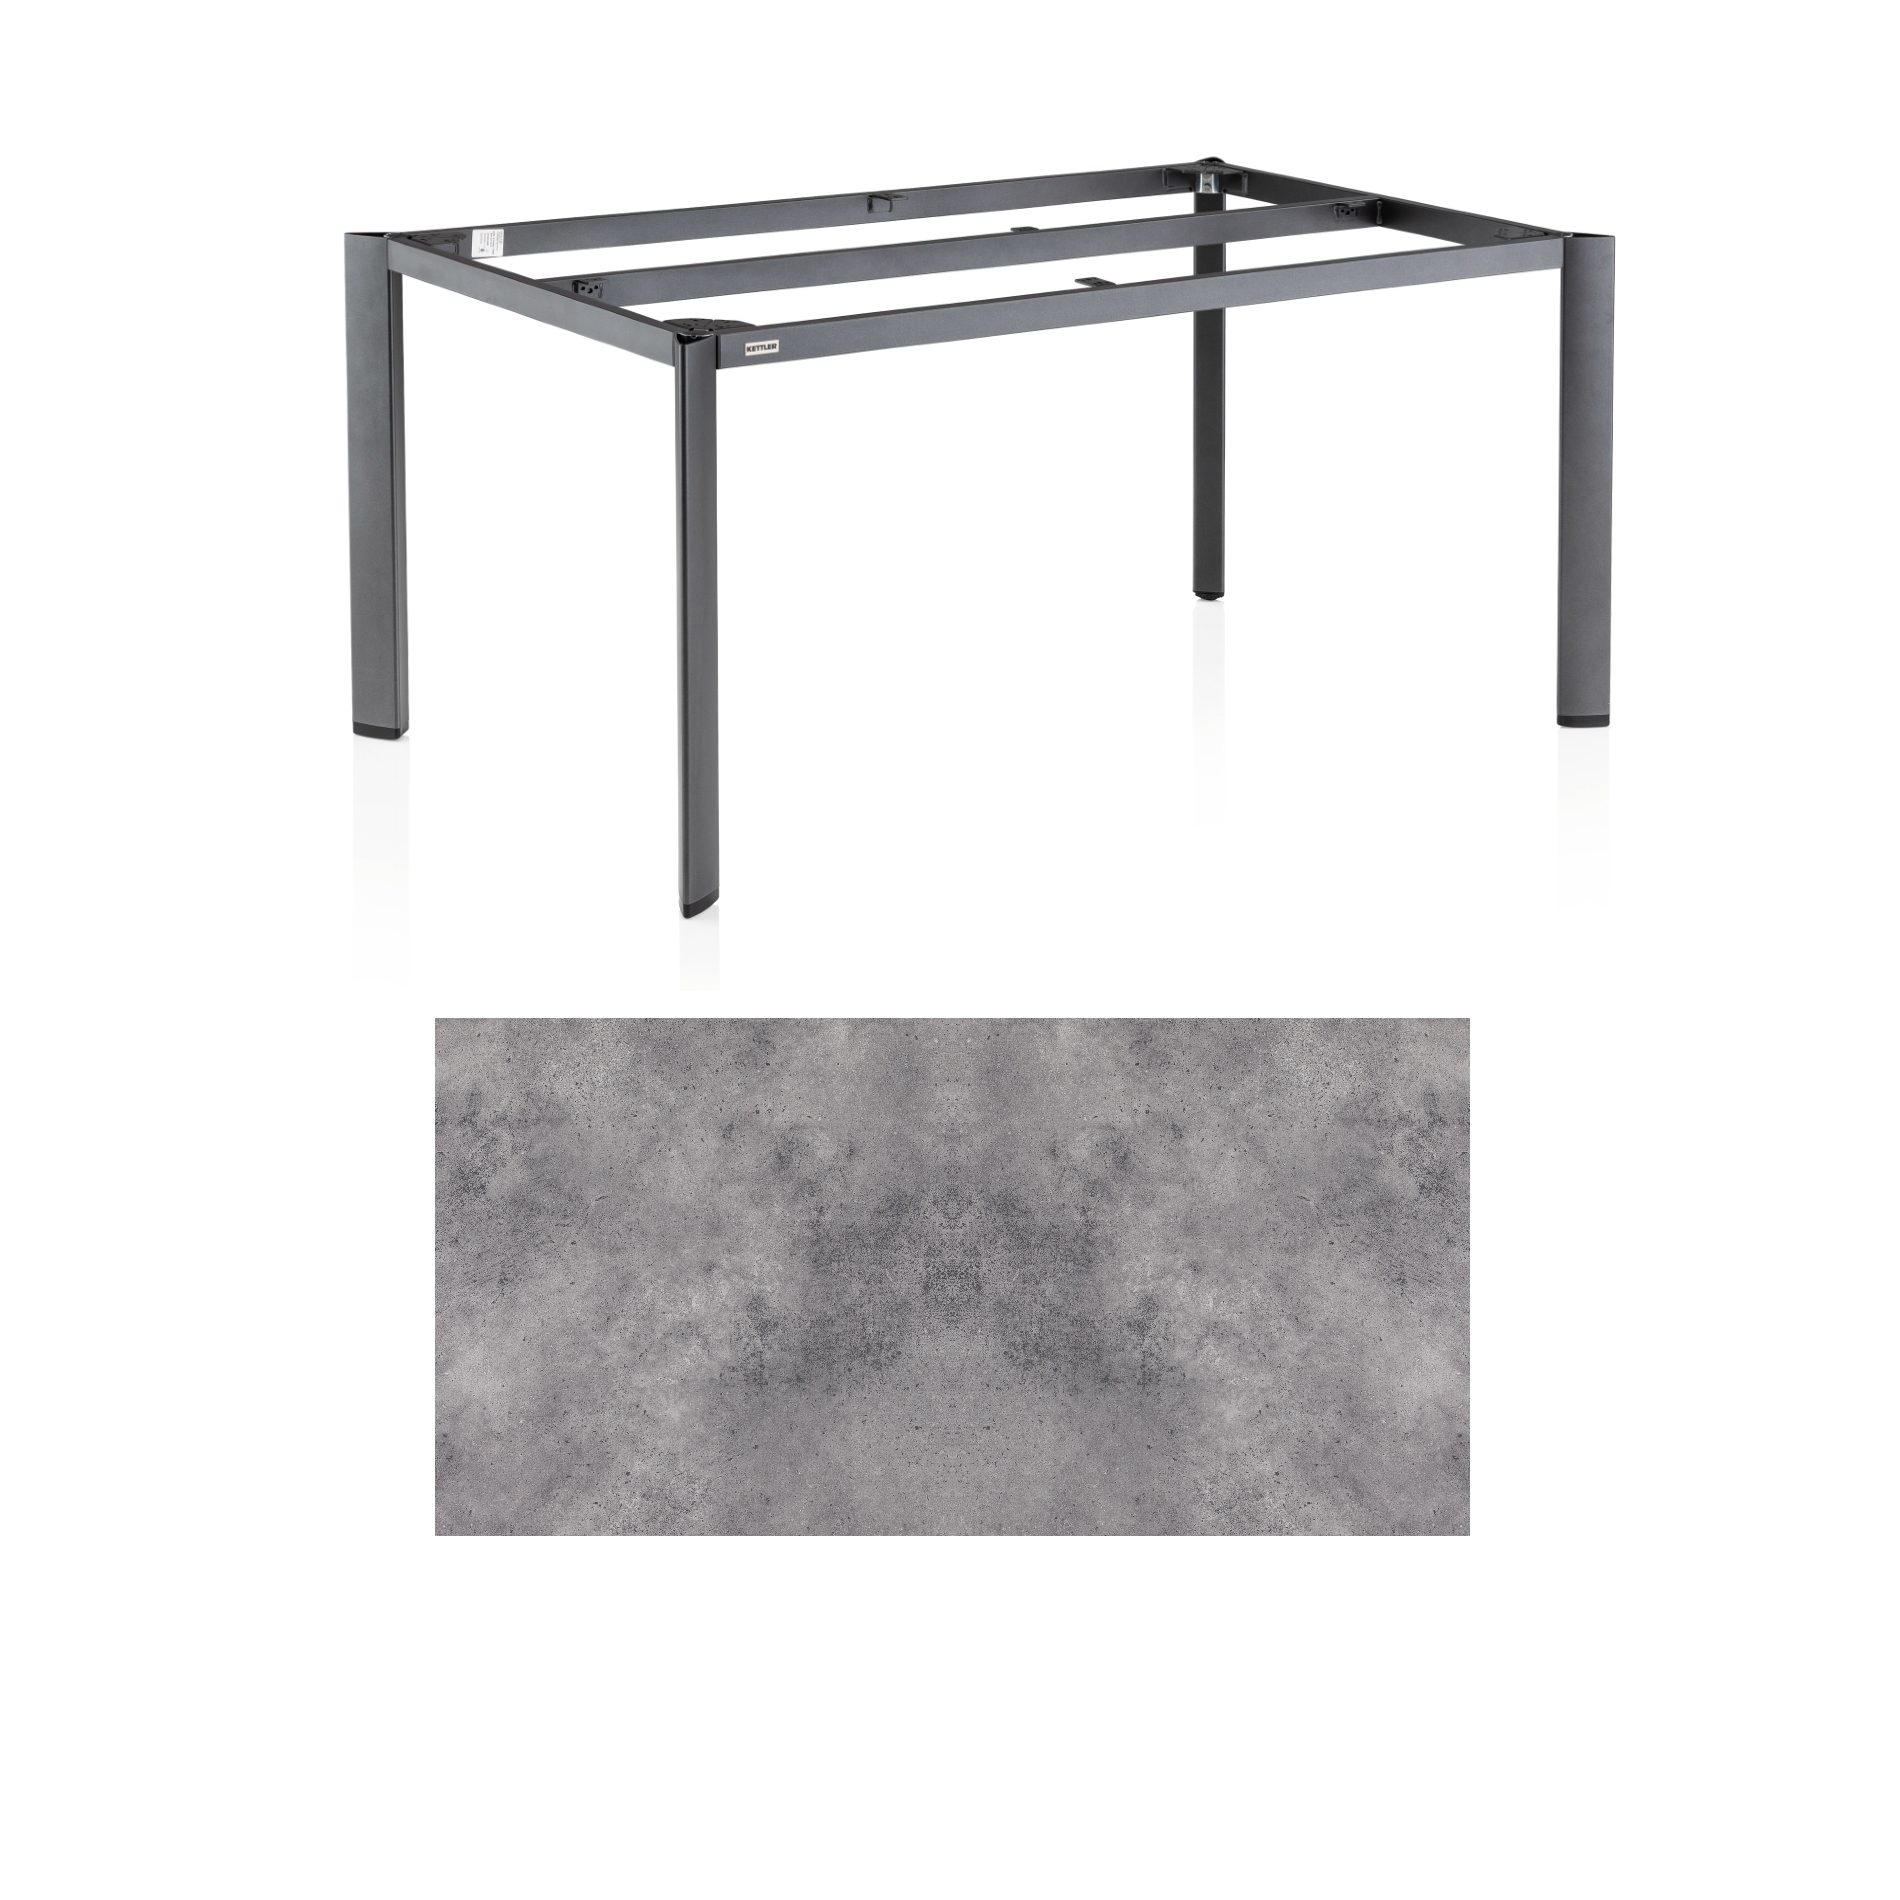 Kettler "Edge" Gartentisch, Gestell Aluminium anthrazit, Tischplatte HPL anthrazit, 180x95 cm